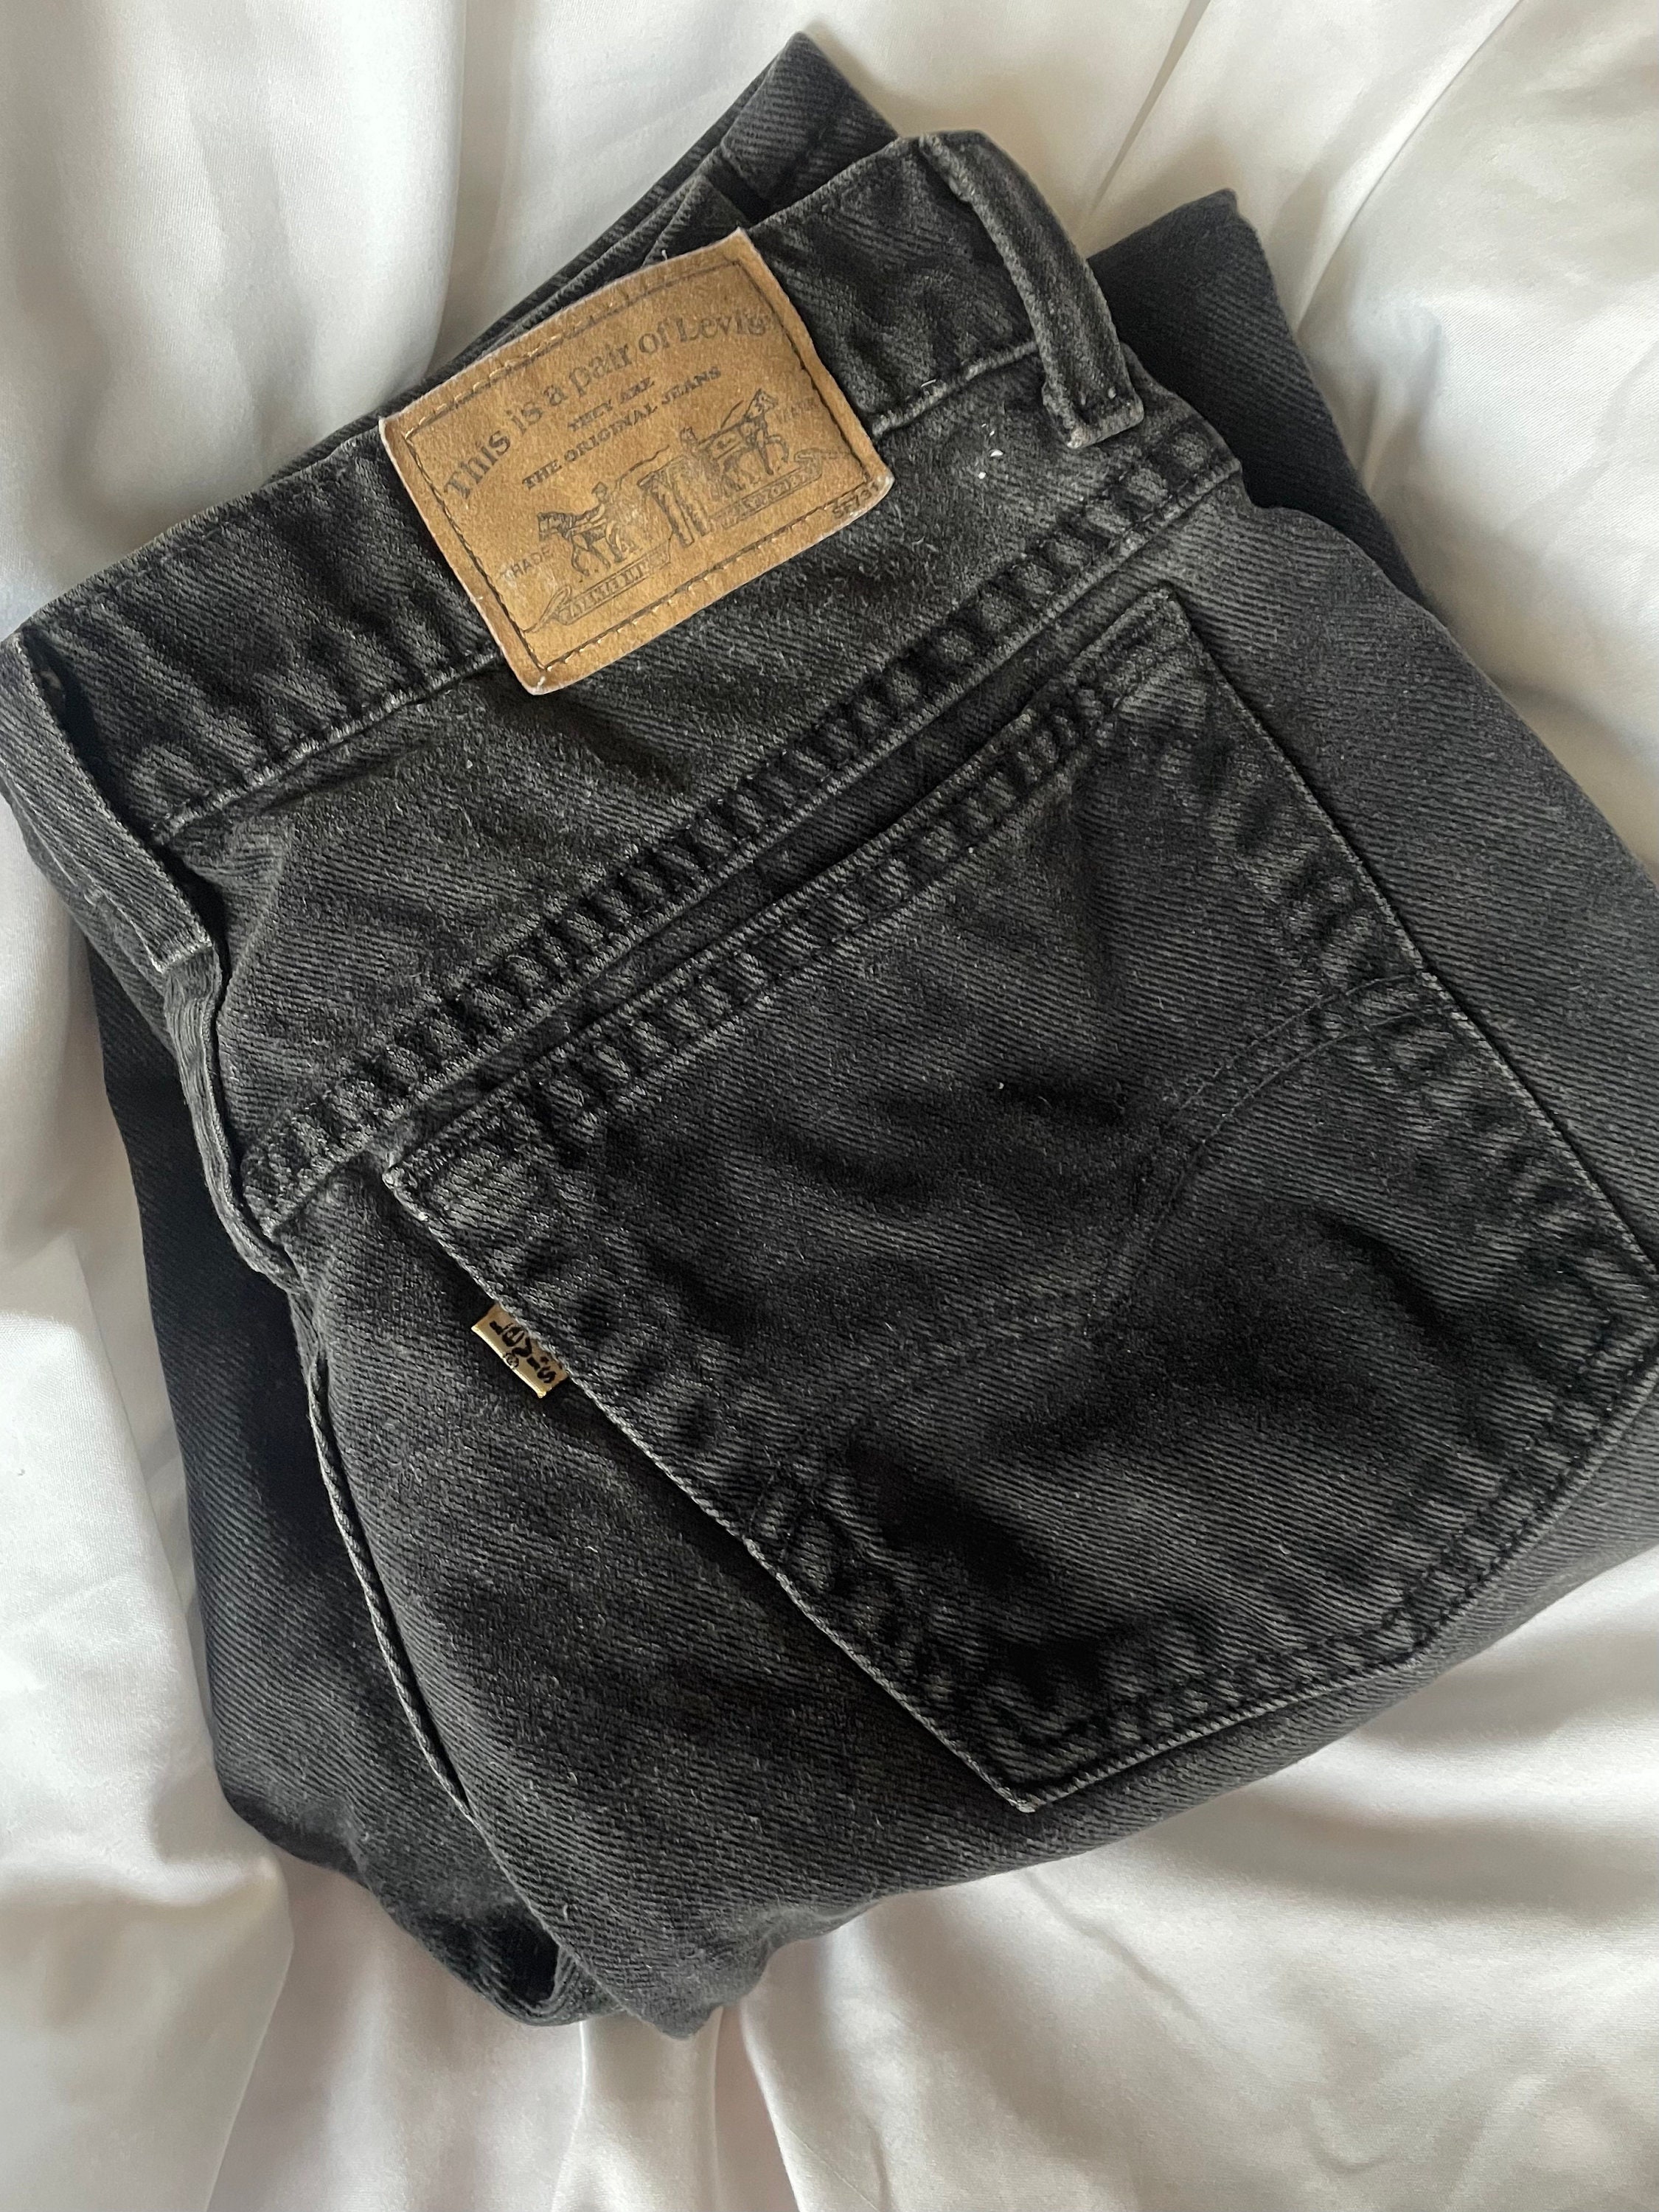 Levi's® Silvertab™ Loose Cargo Jeans - Black